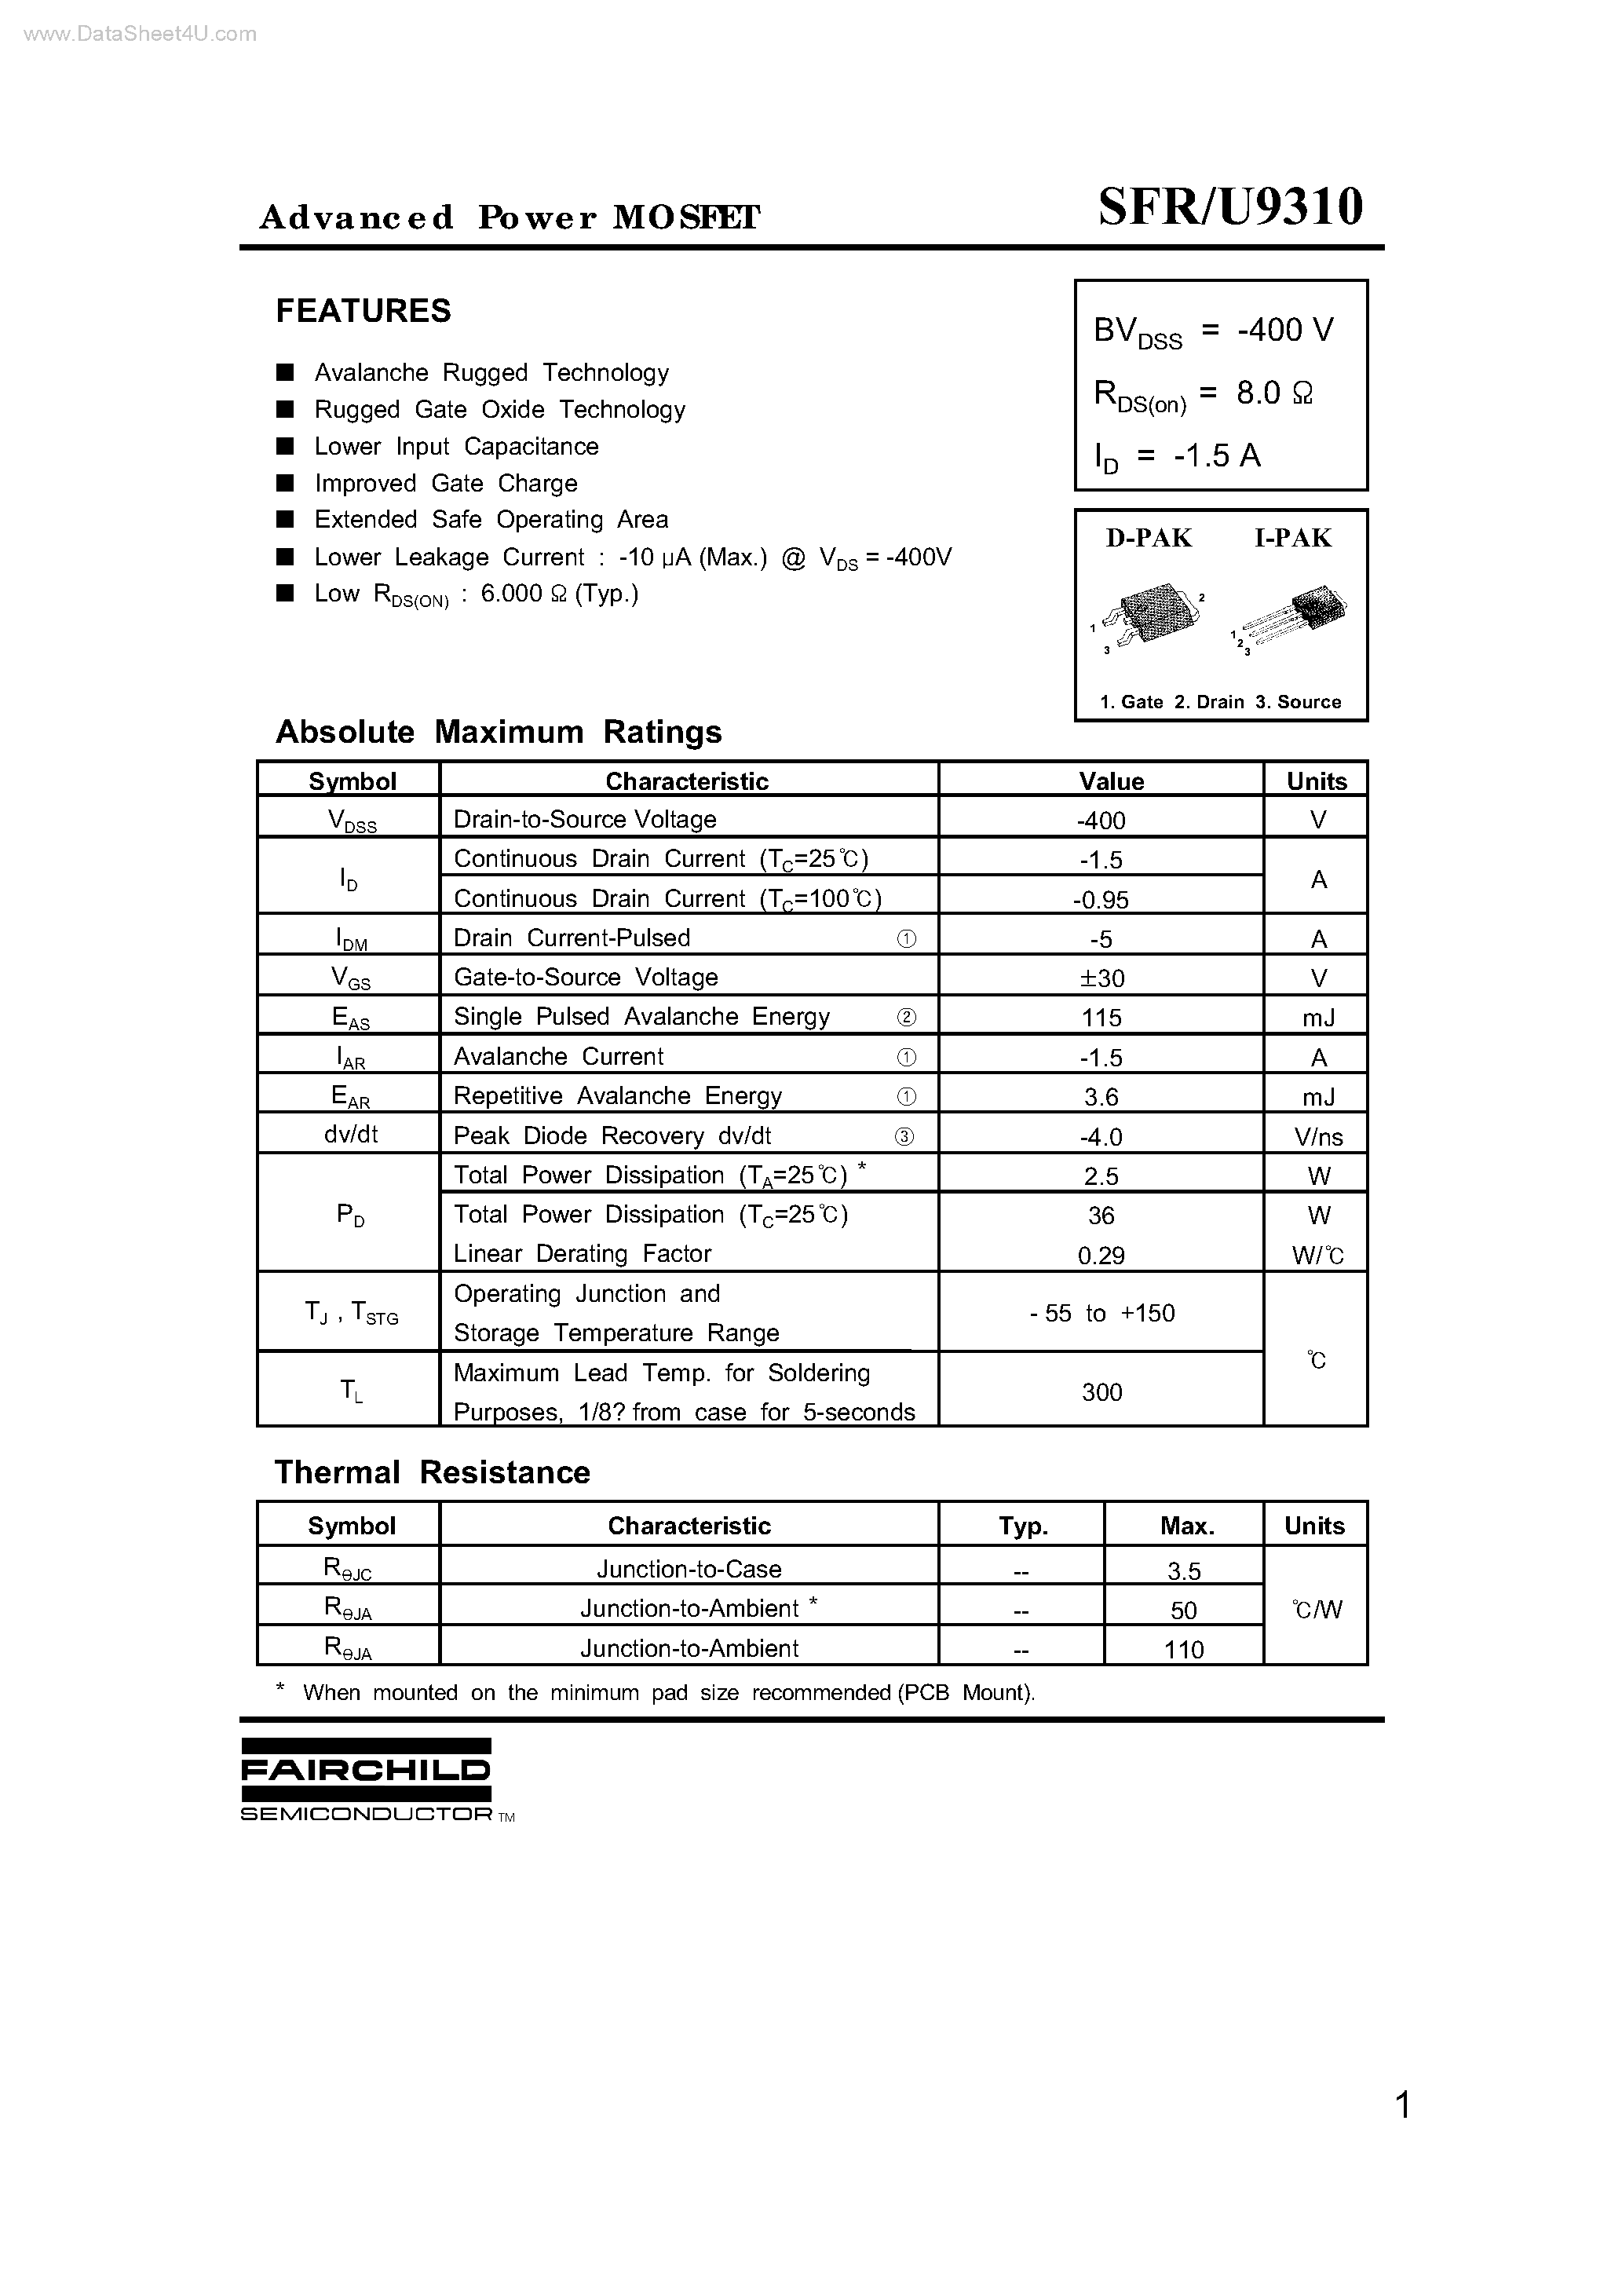 Datasheet SFR/U9310 - Advanced Power MOSFET page 1